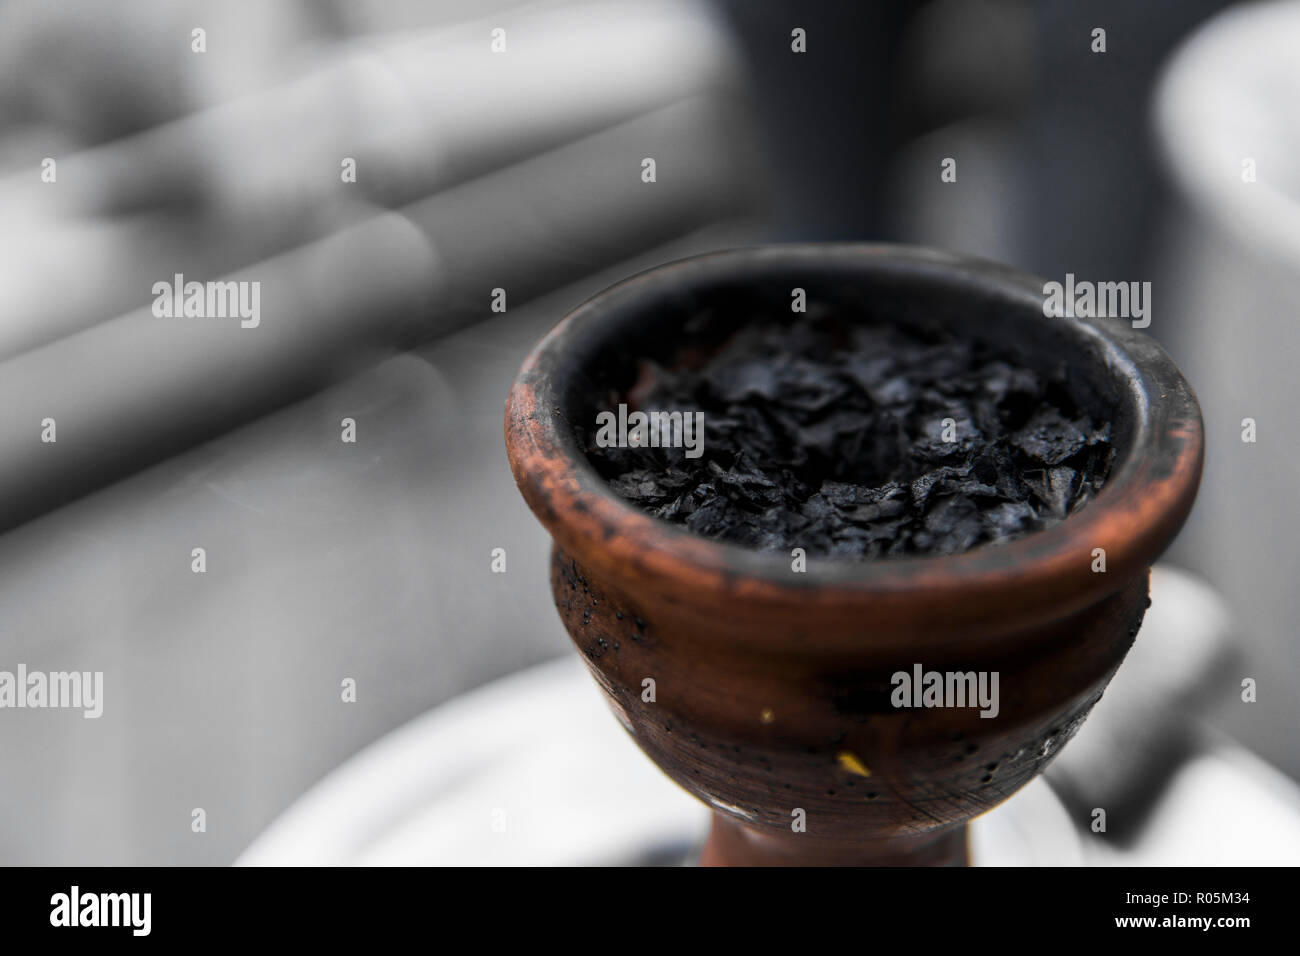 https://c8.alamy.com/comp/R05M34/tobacco-for-hookah-in-a-clay-bowl-for-shisha-smoke-R05M34.jpg